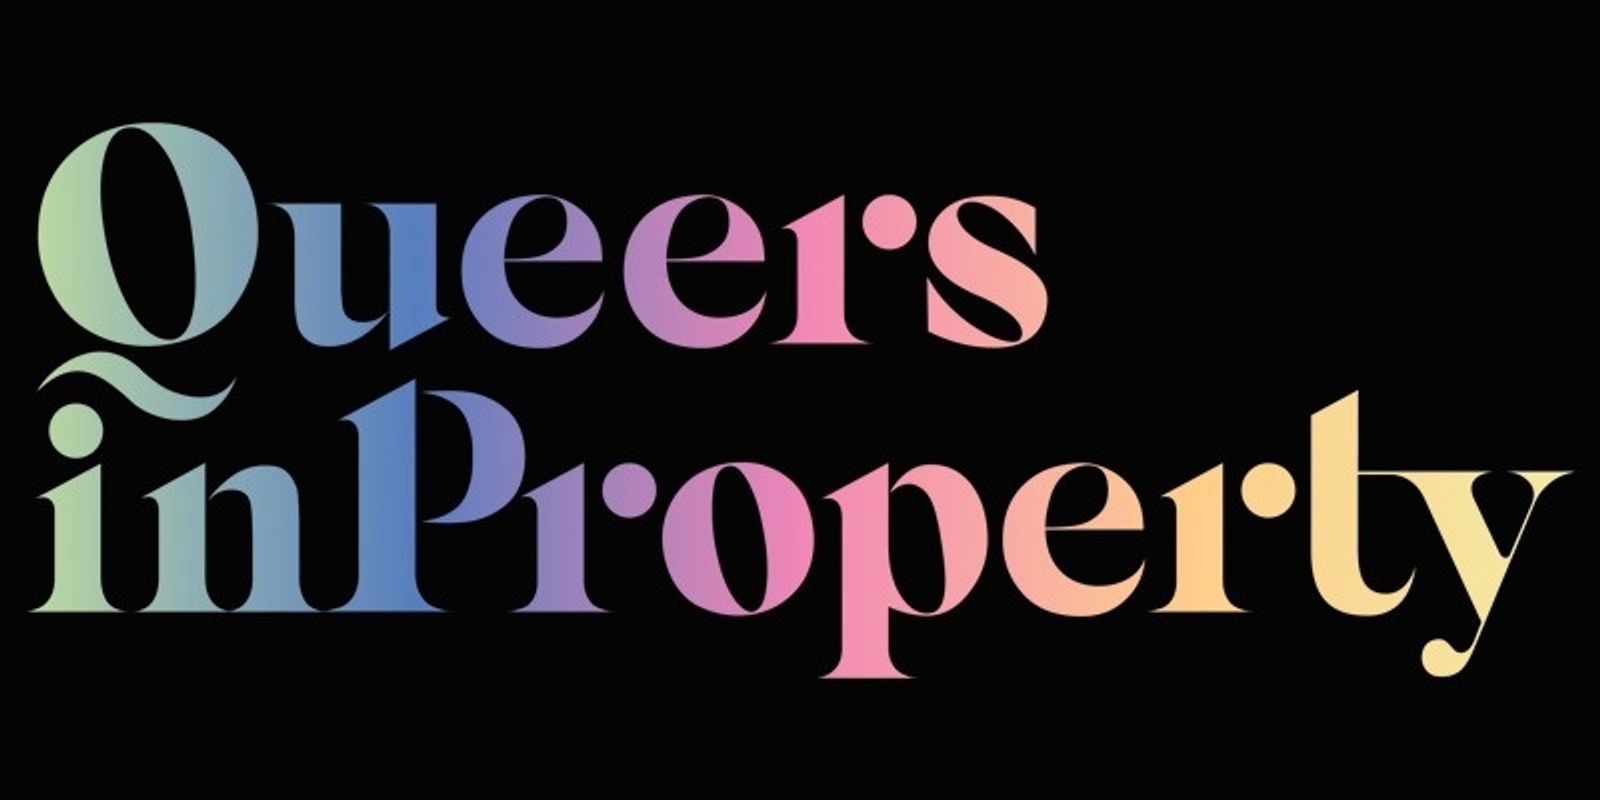 Queers in Property's banner